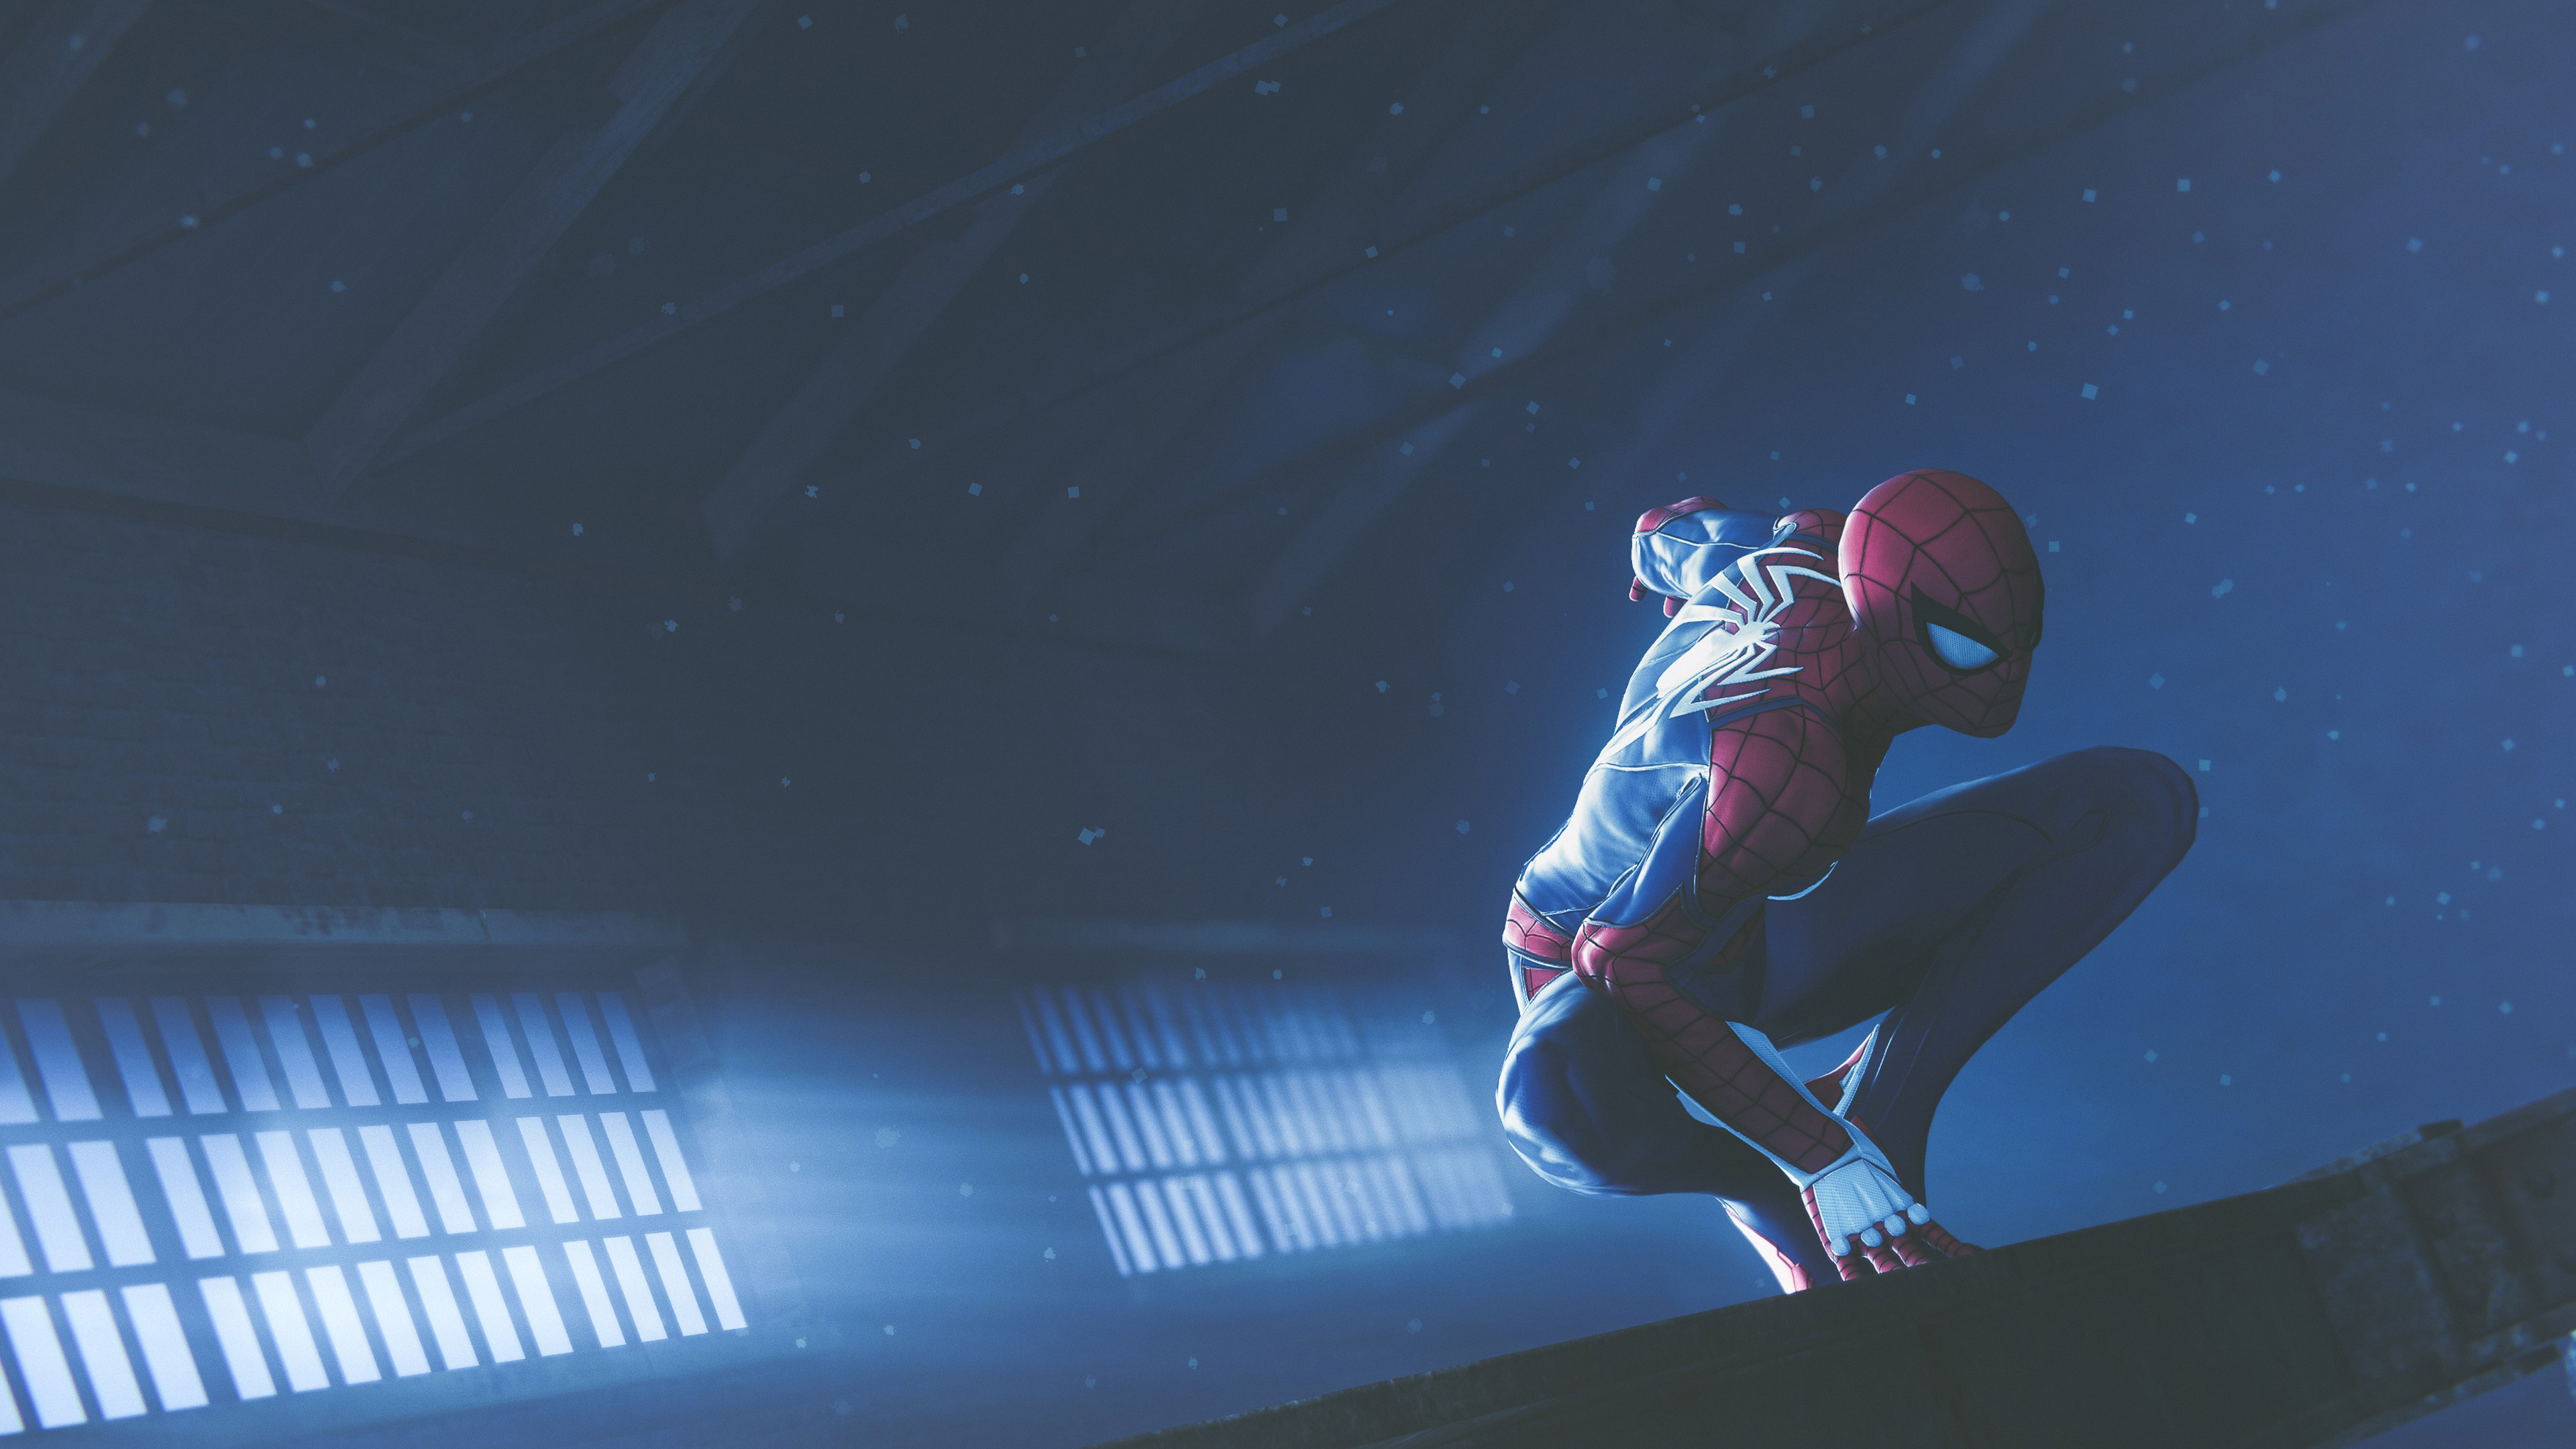 Spider-Man Remastered Mod Brings Back Peter Parkers Face - Gameranx